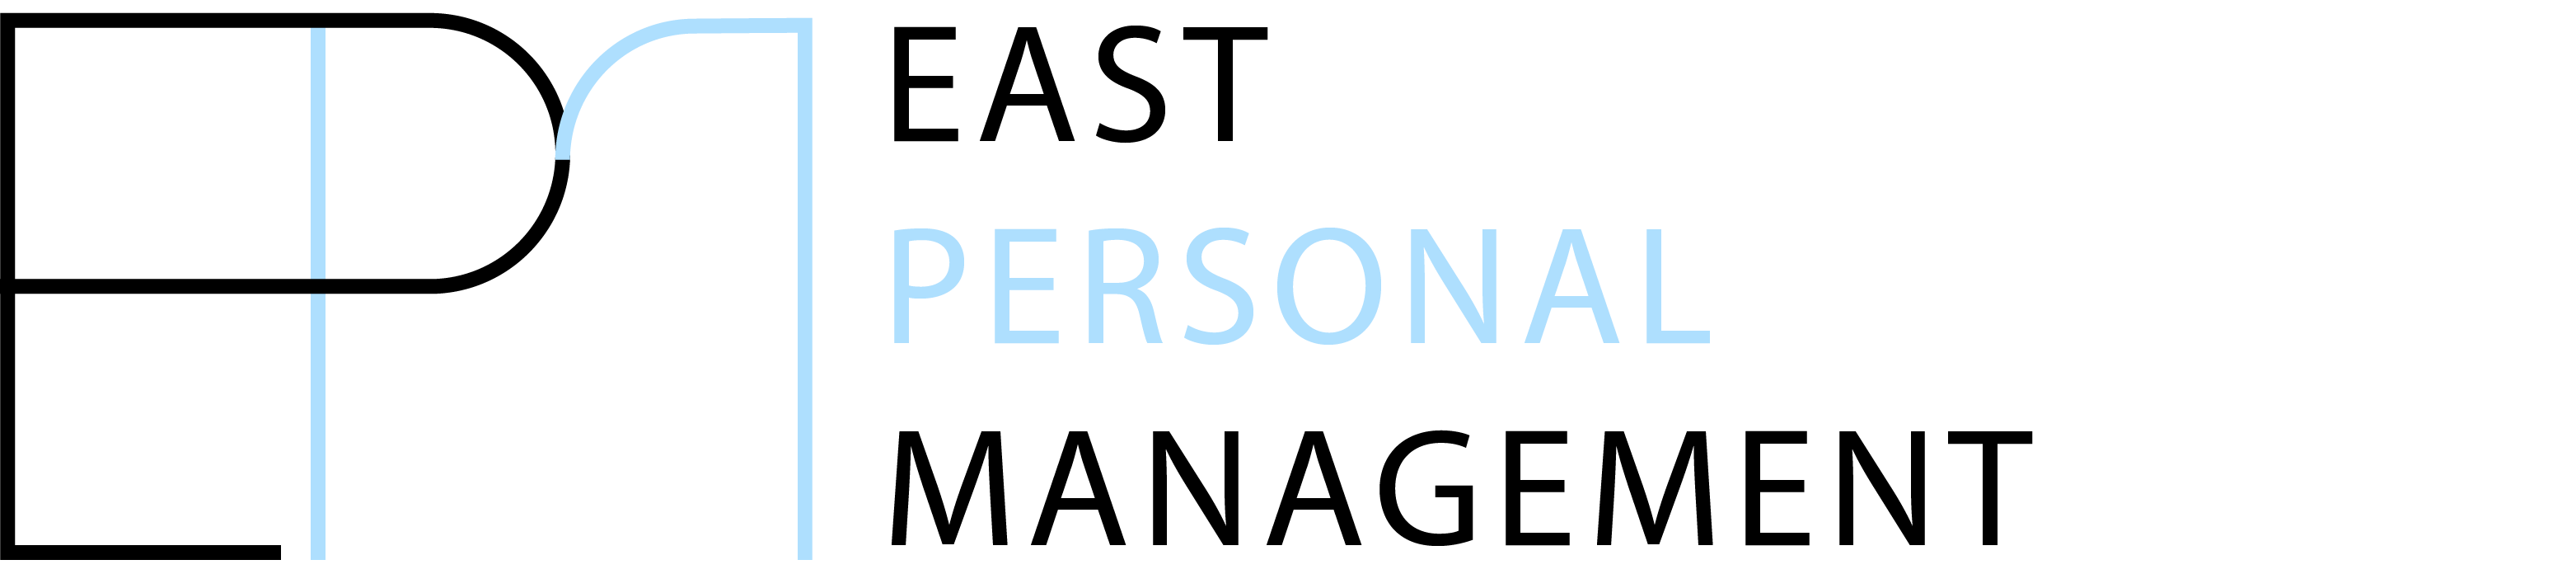 East Personal Management Reinigung Logo